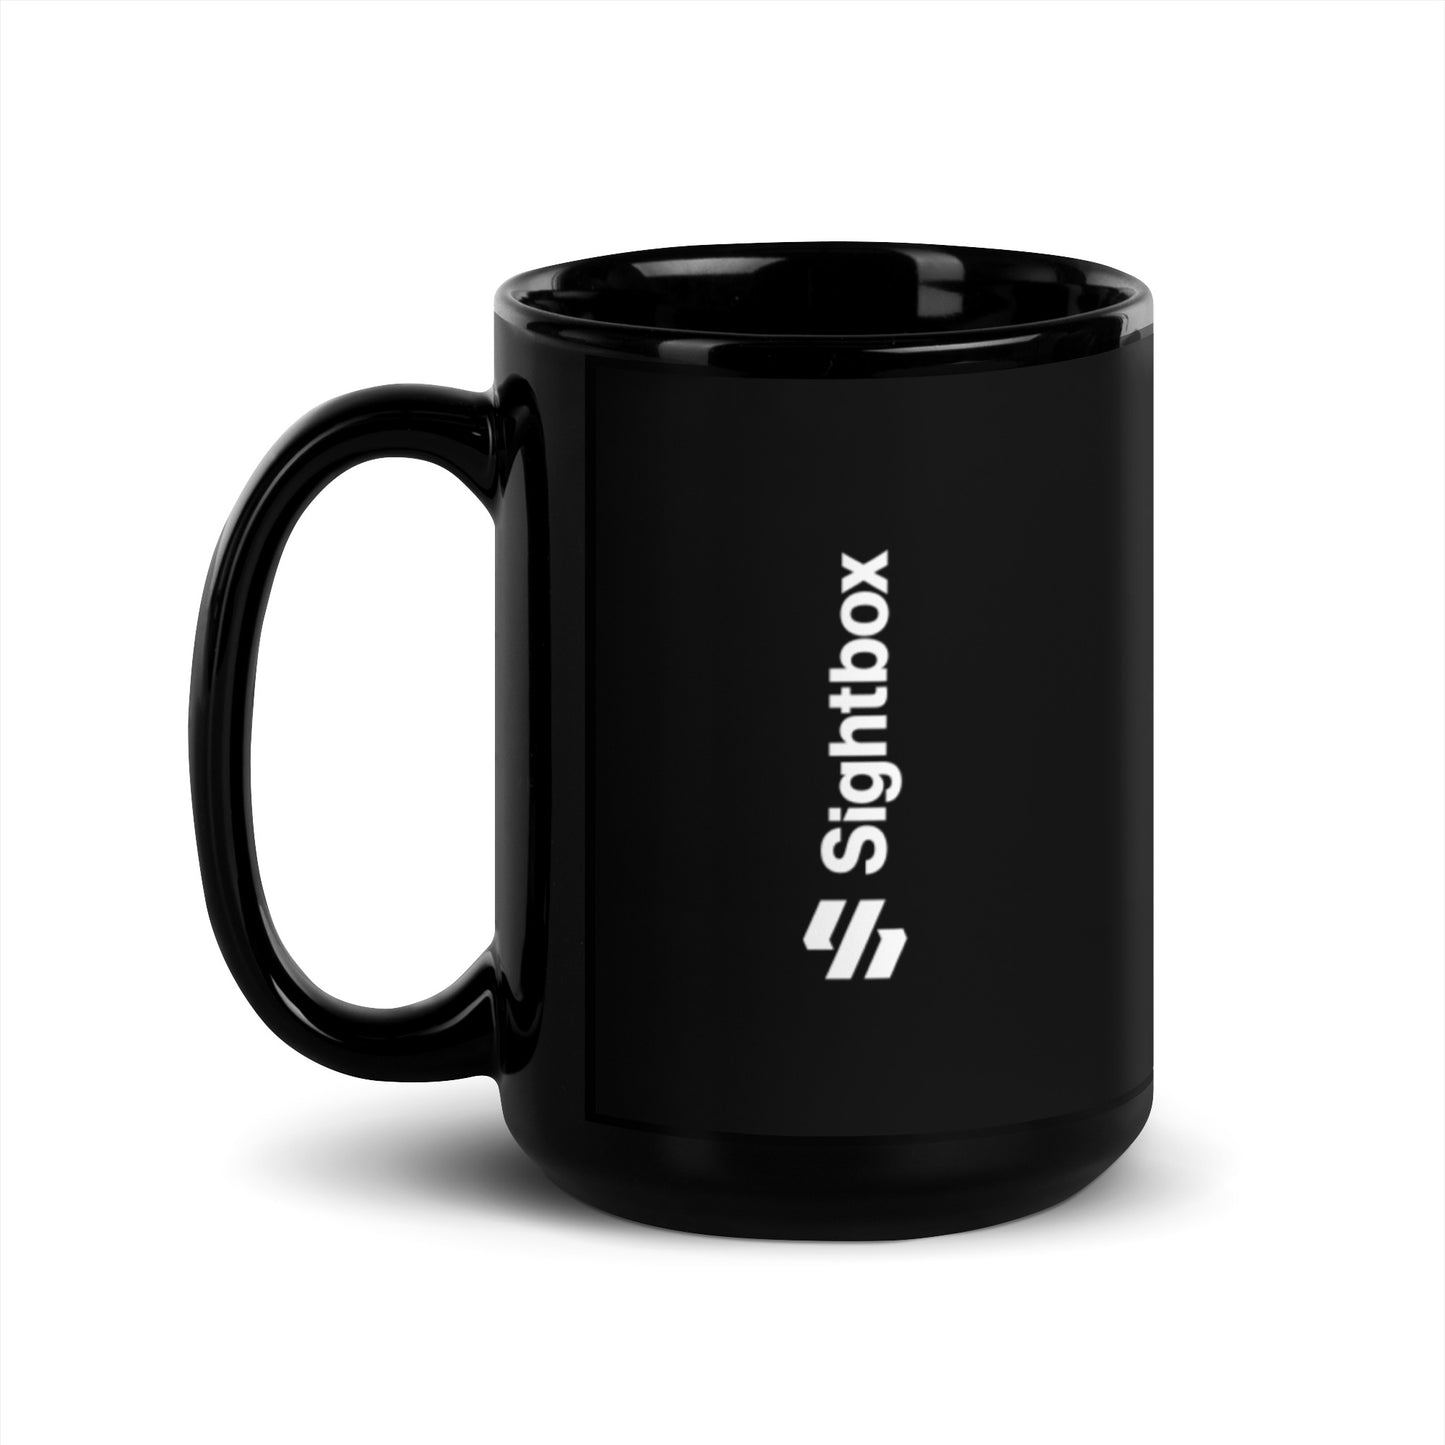 Sightbox 3 Black Glossy Mug